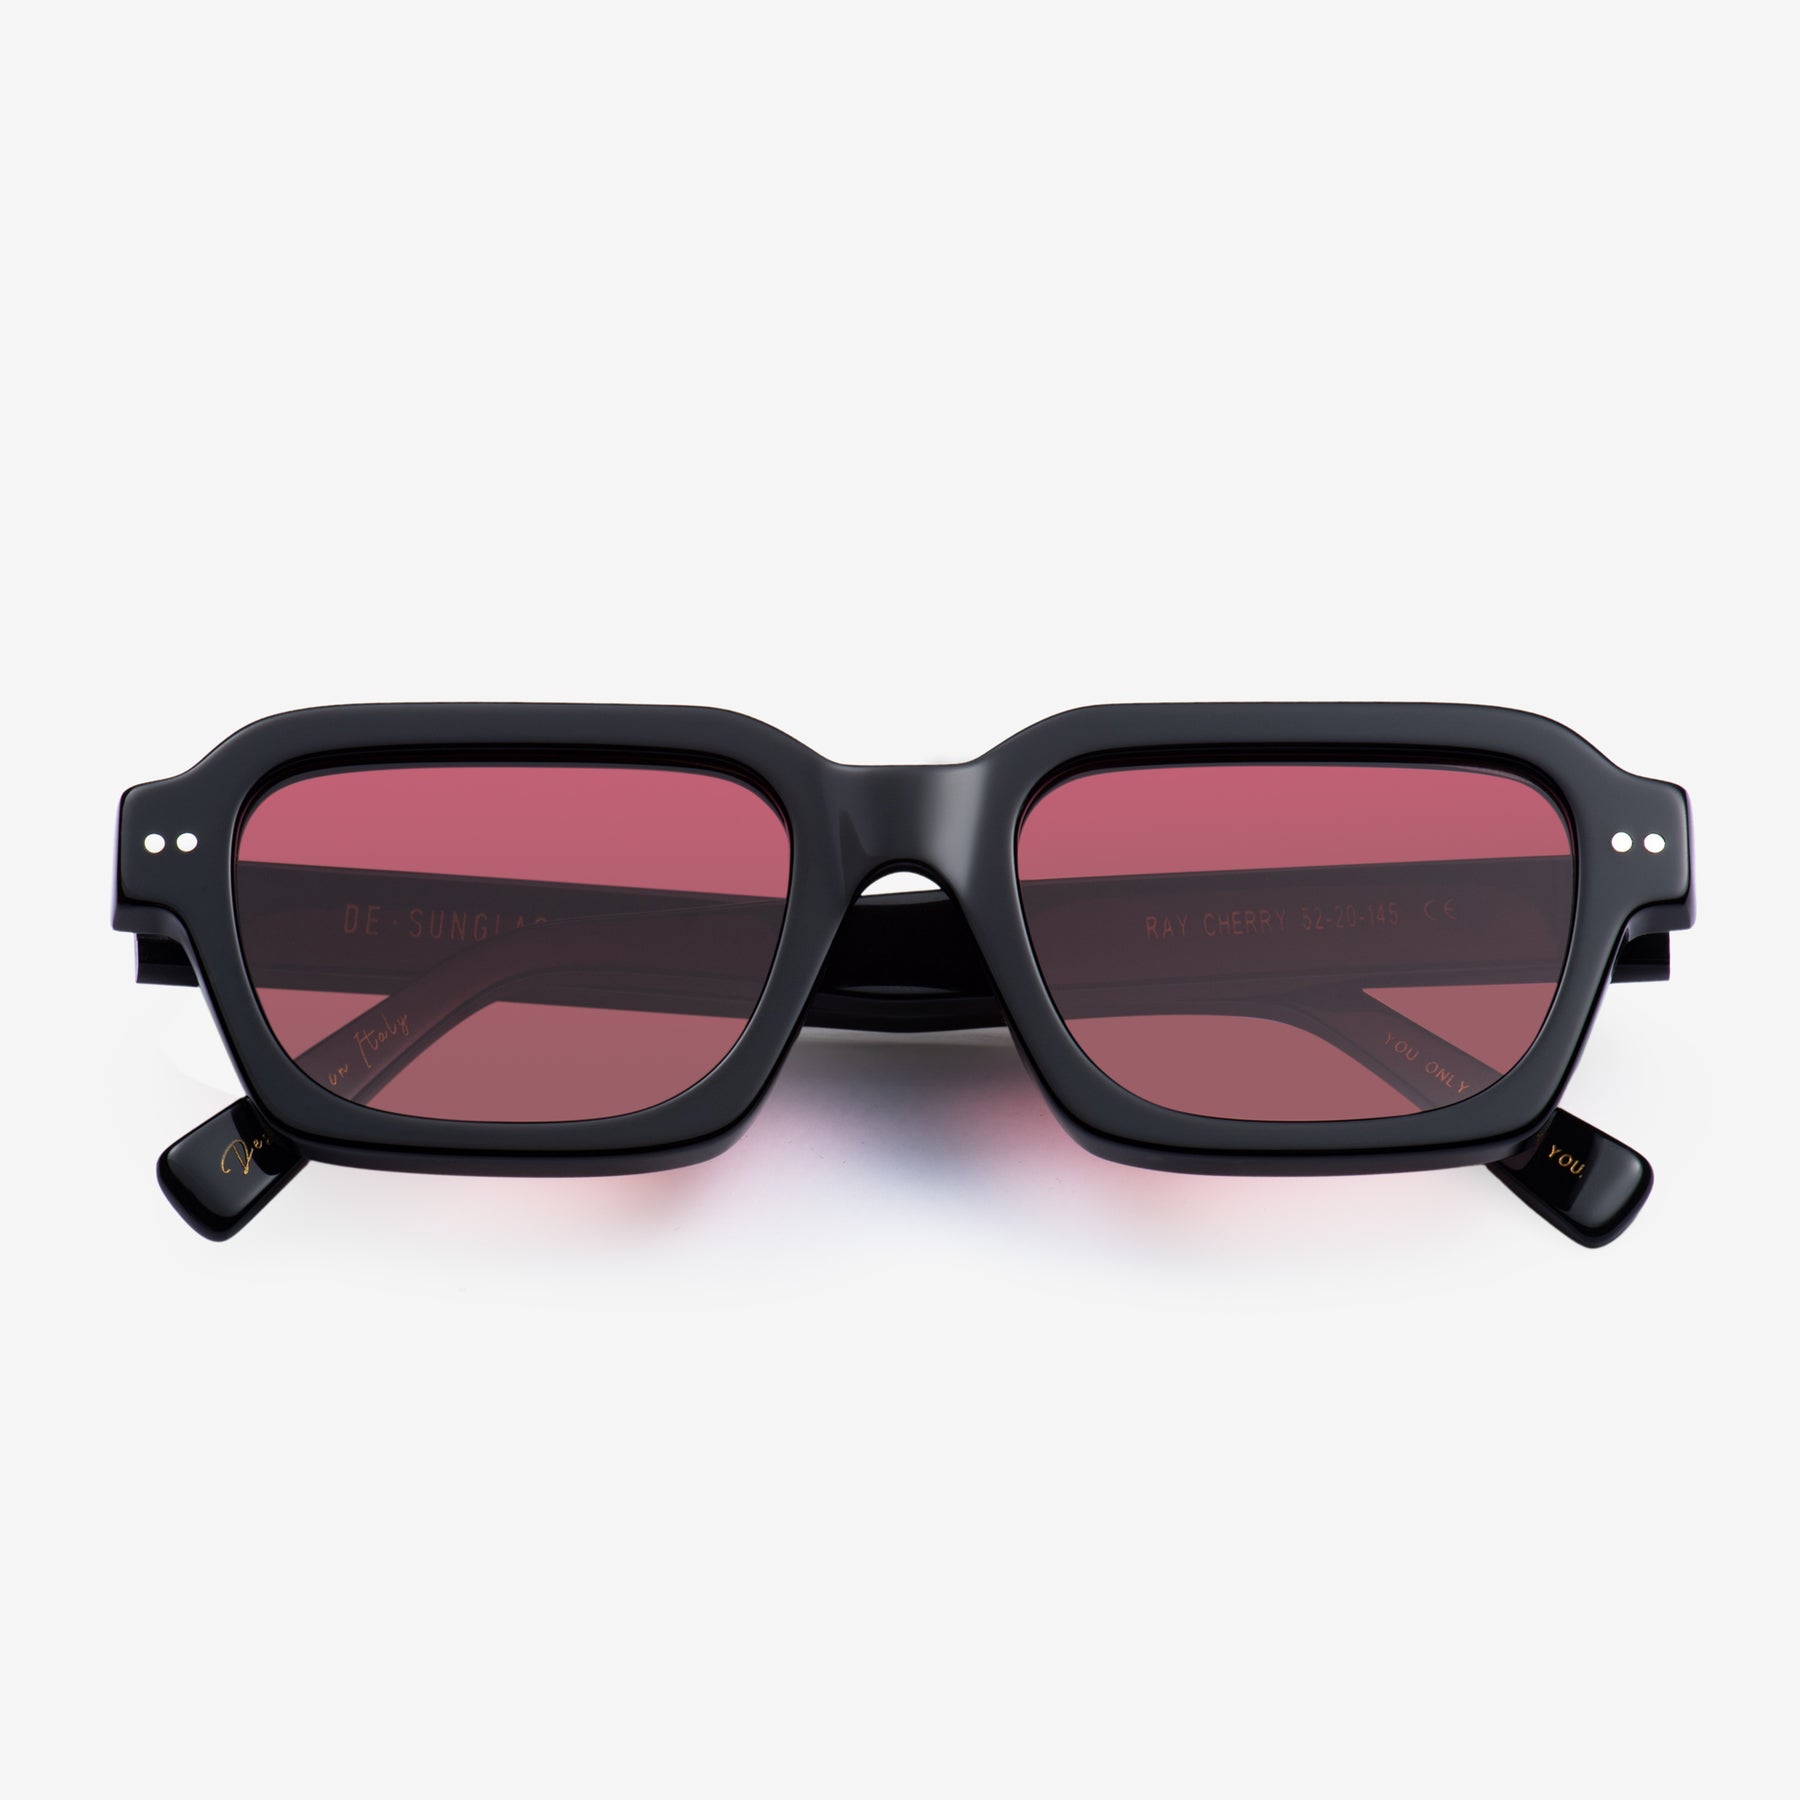 De-sunglasses| Ray cherry